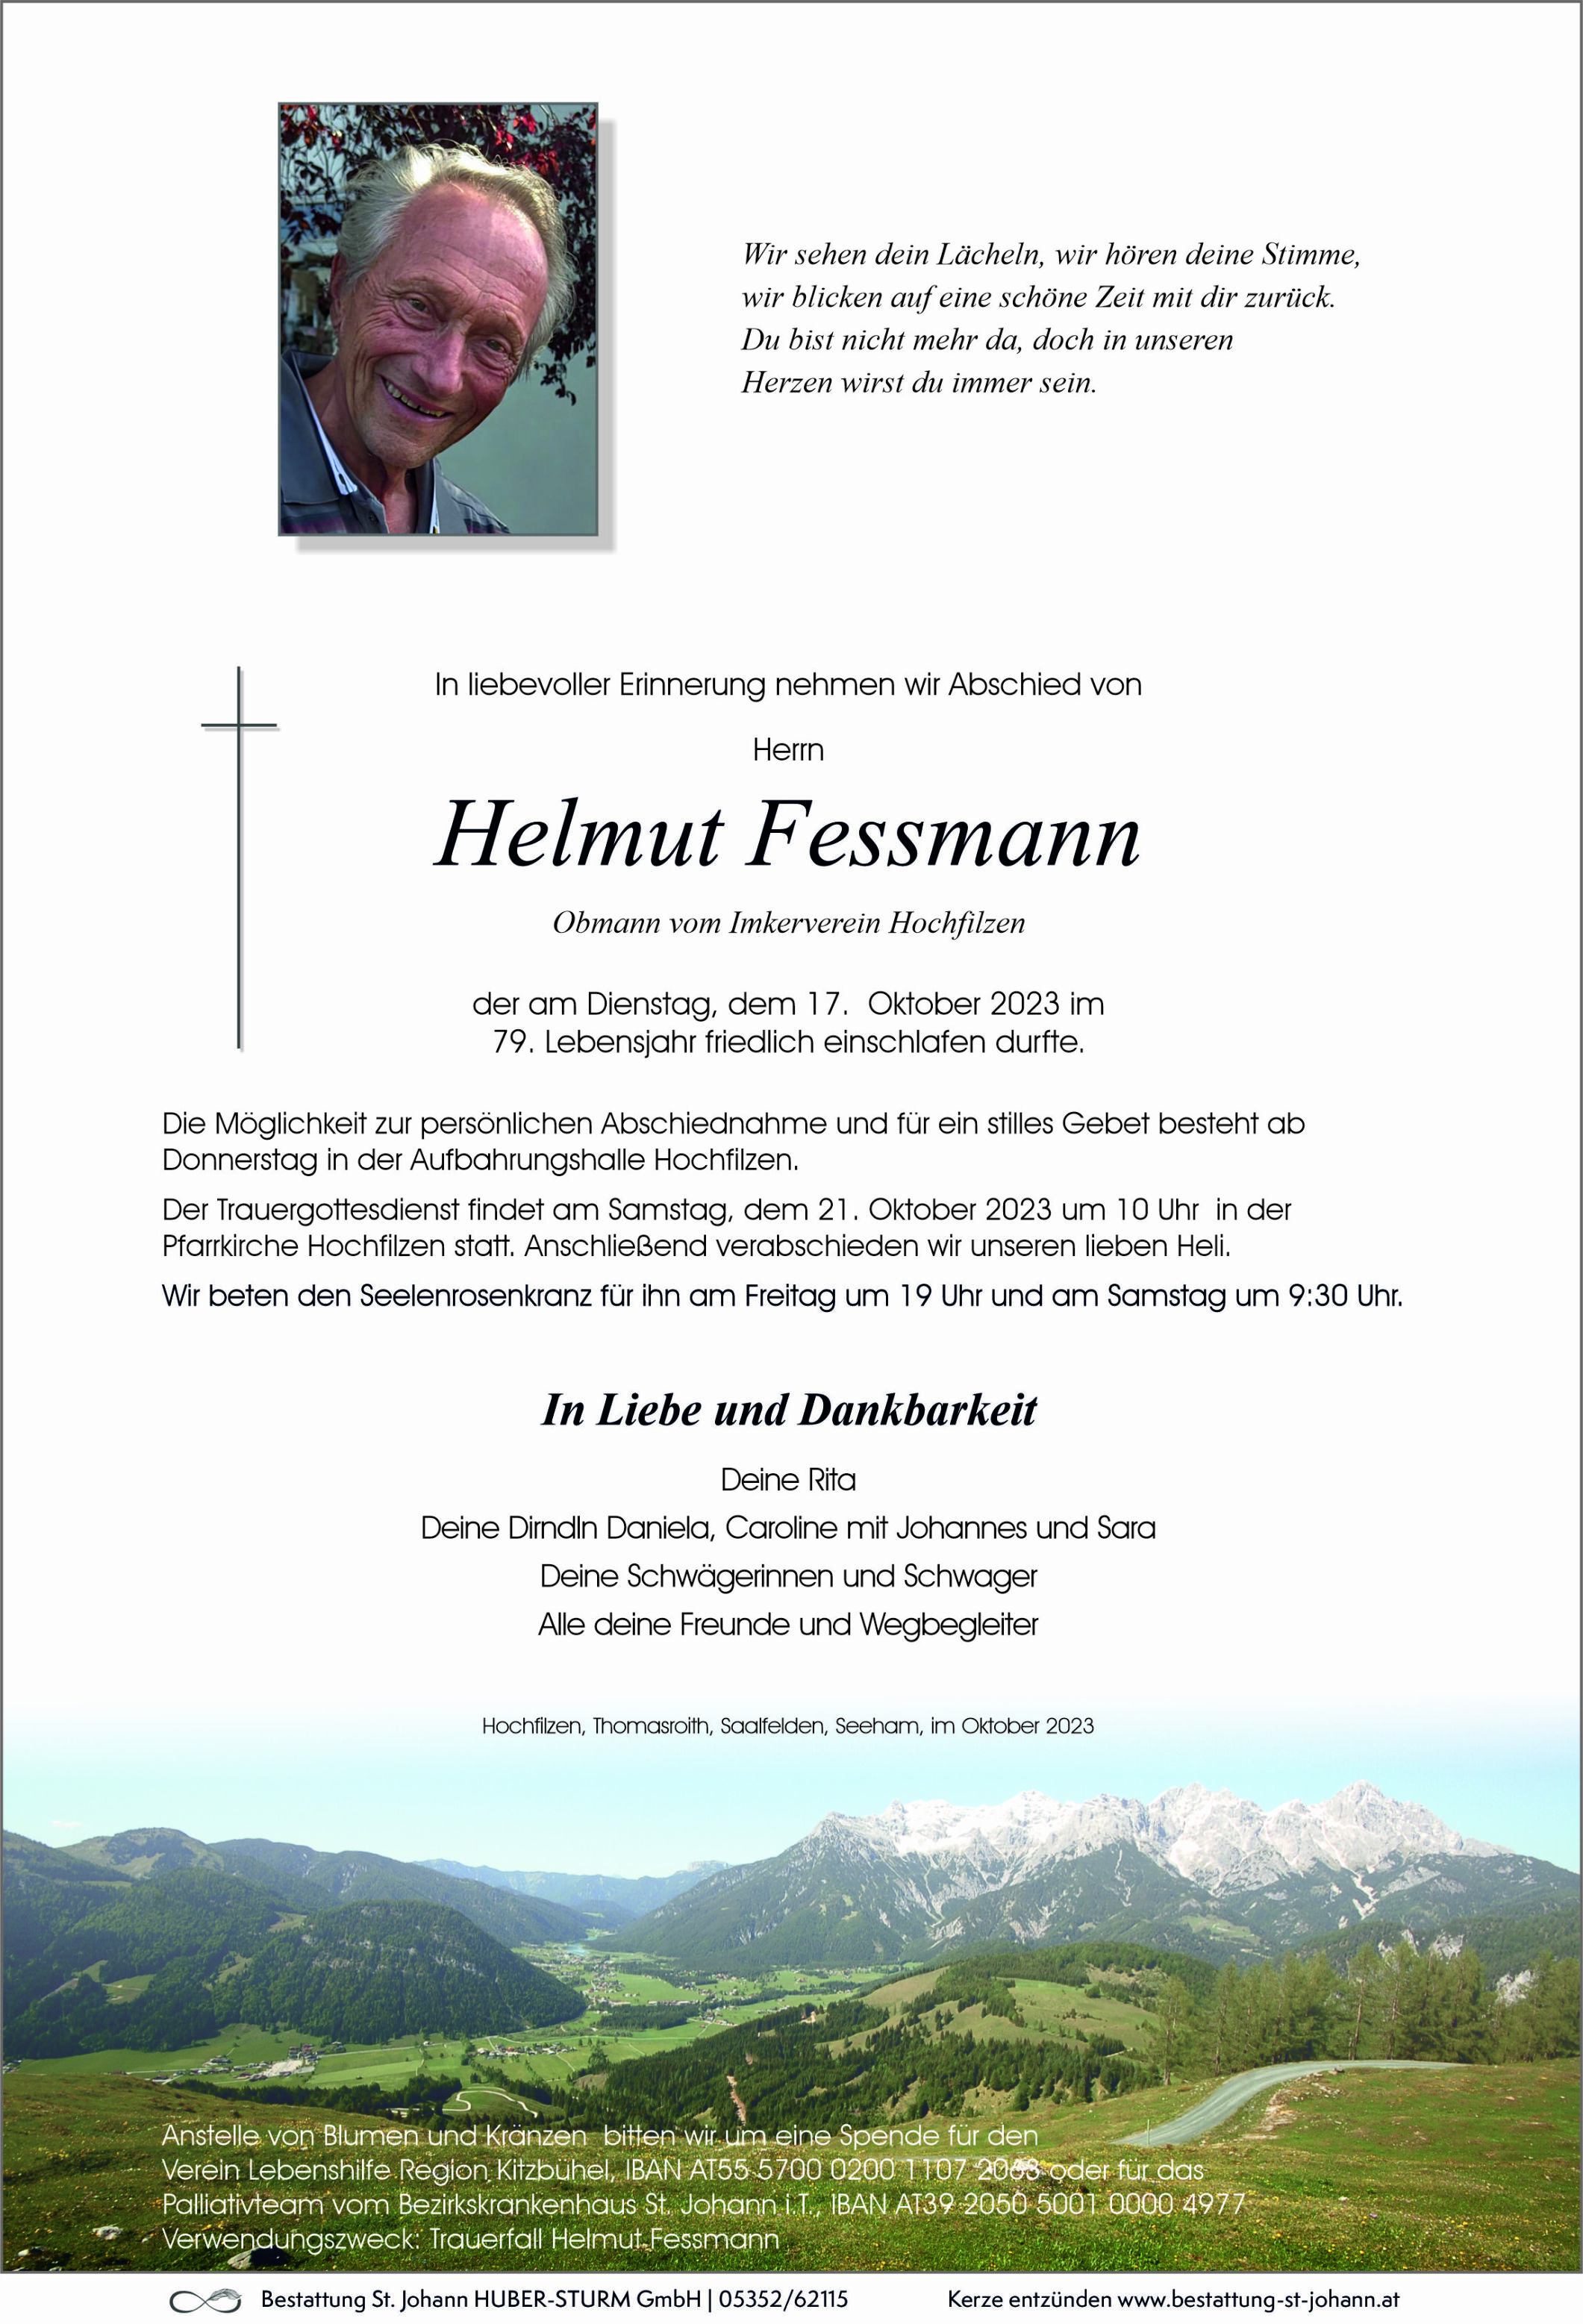 Helmut Fessmann